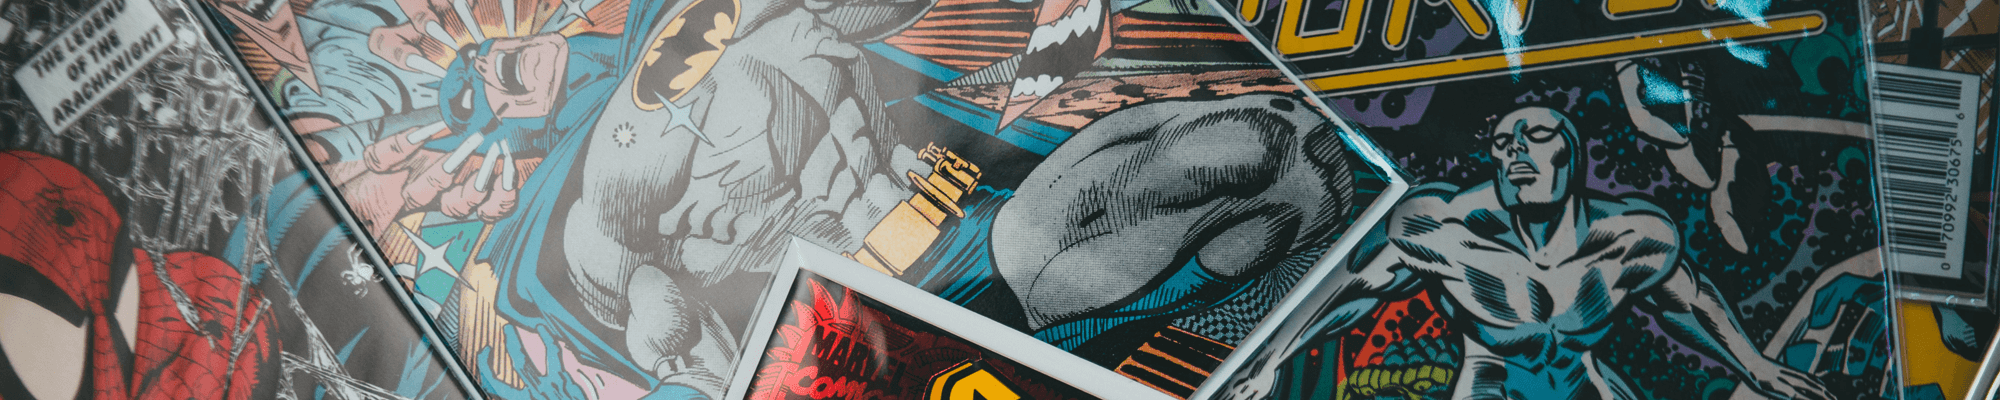 various comic books: Batman, Silver Surfer, Spiderman